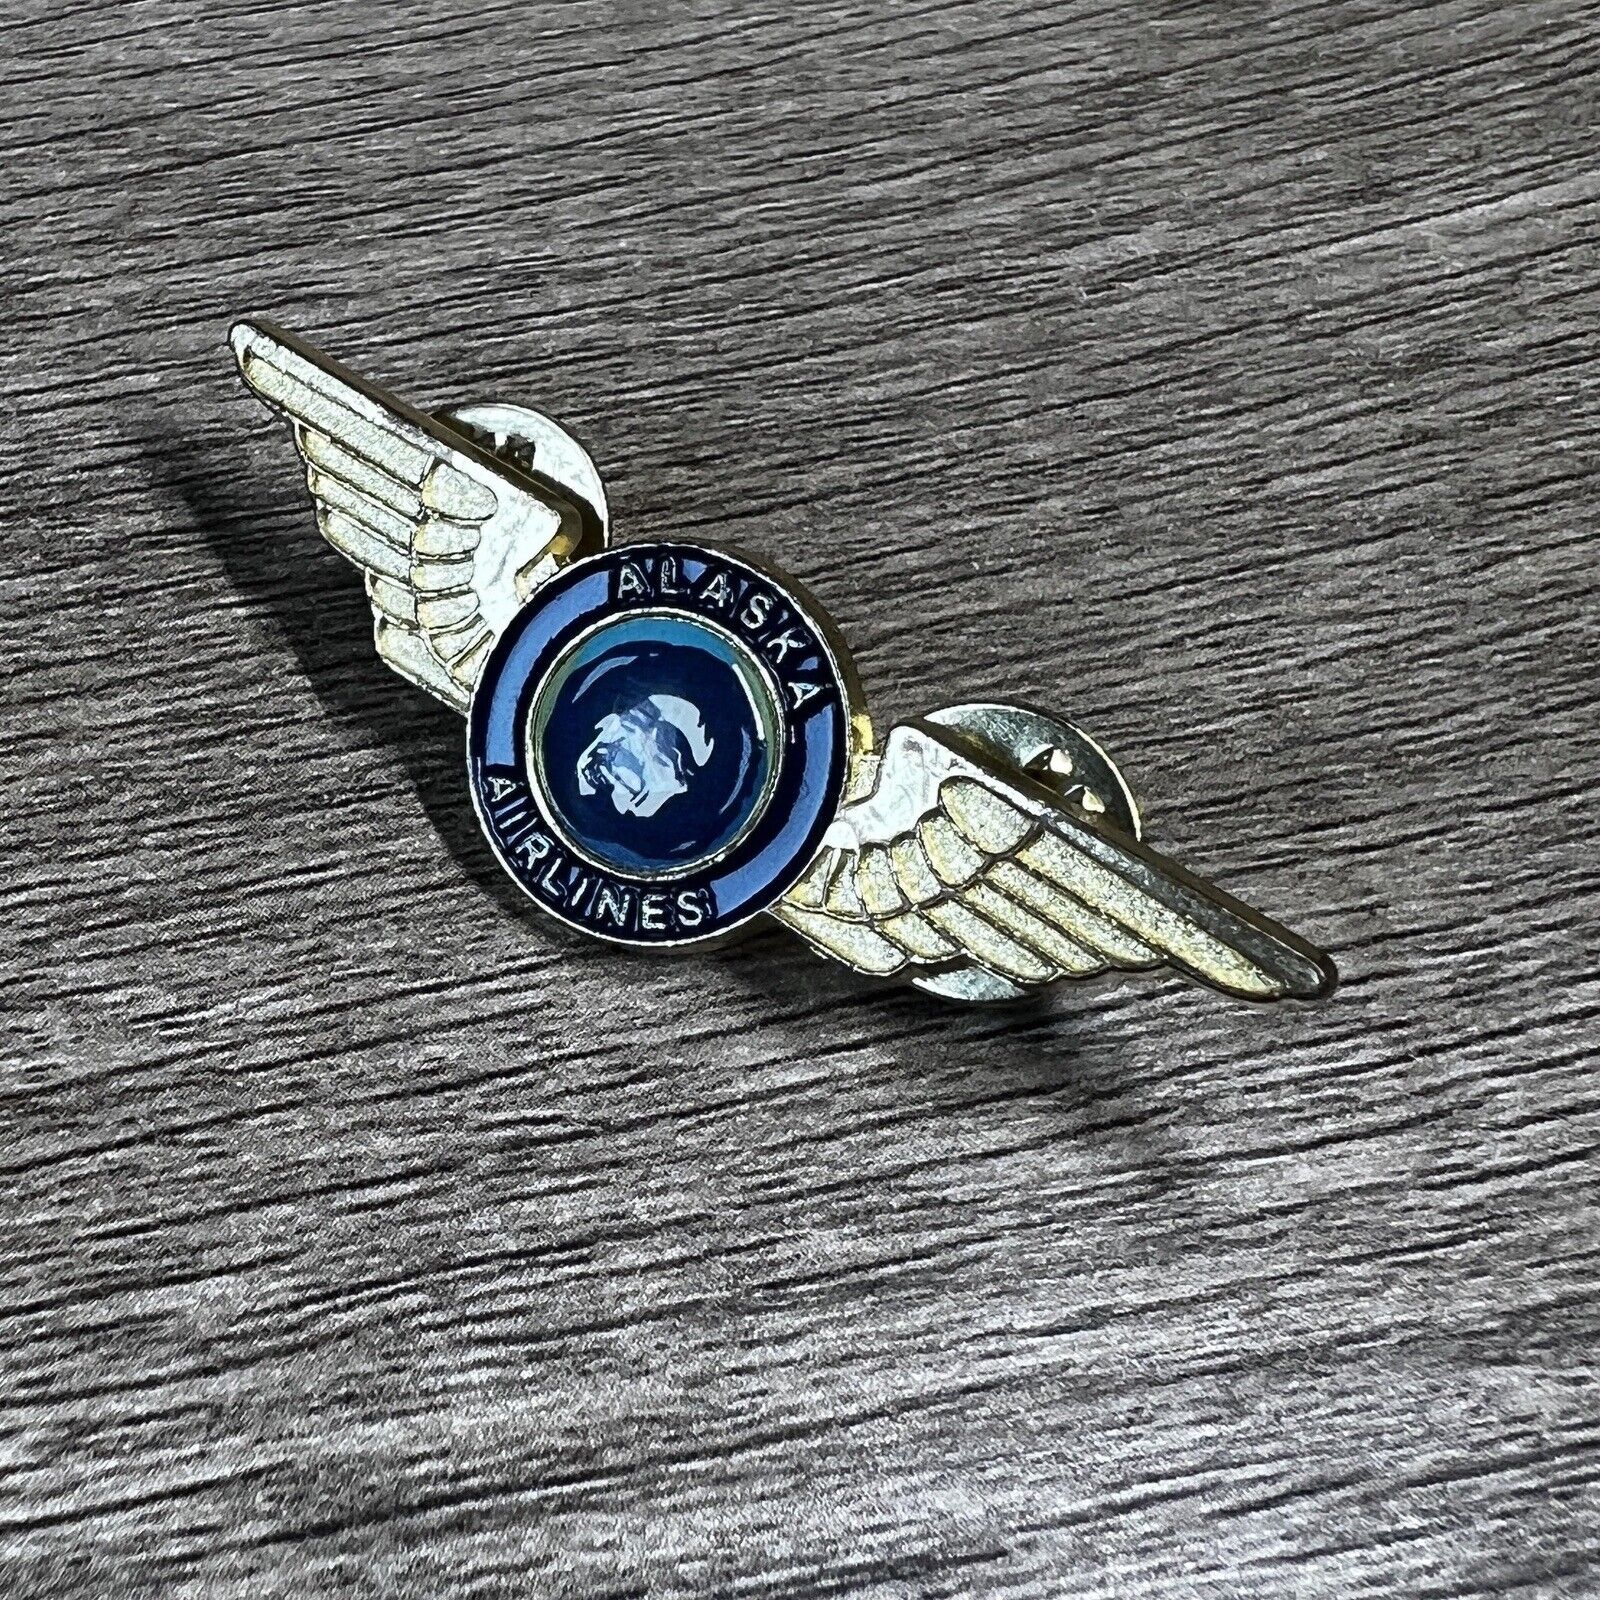 Alaska Airlines Goldtone Metal Wings Lapel Pin Brooch Collectible 2”